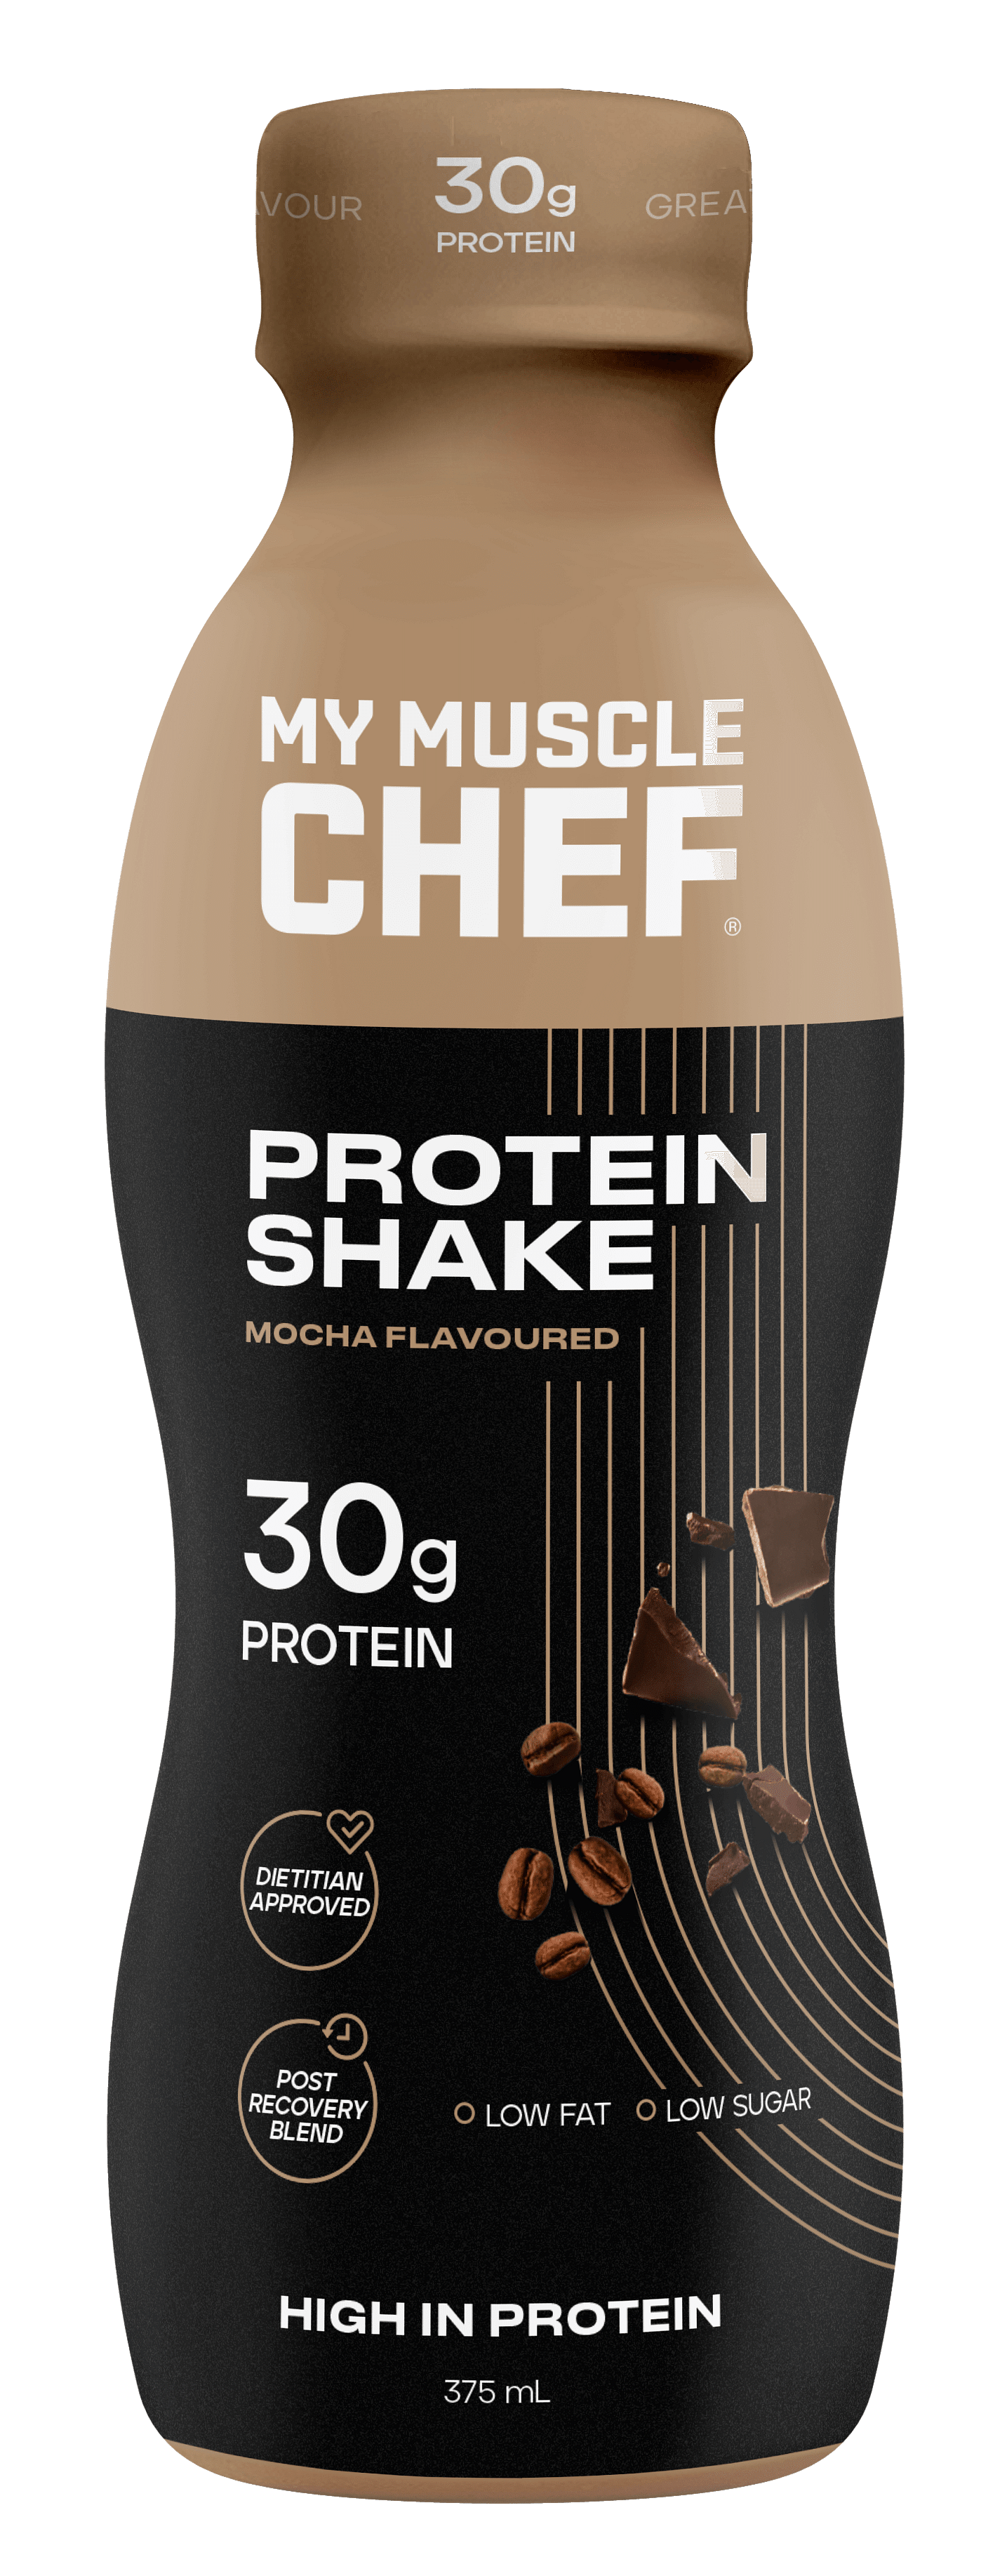 Protein Shake - Mocha Flavoured